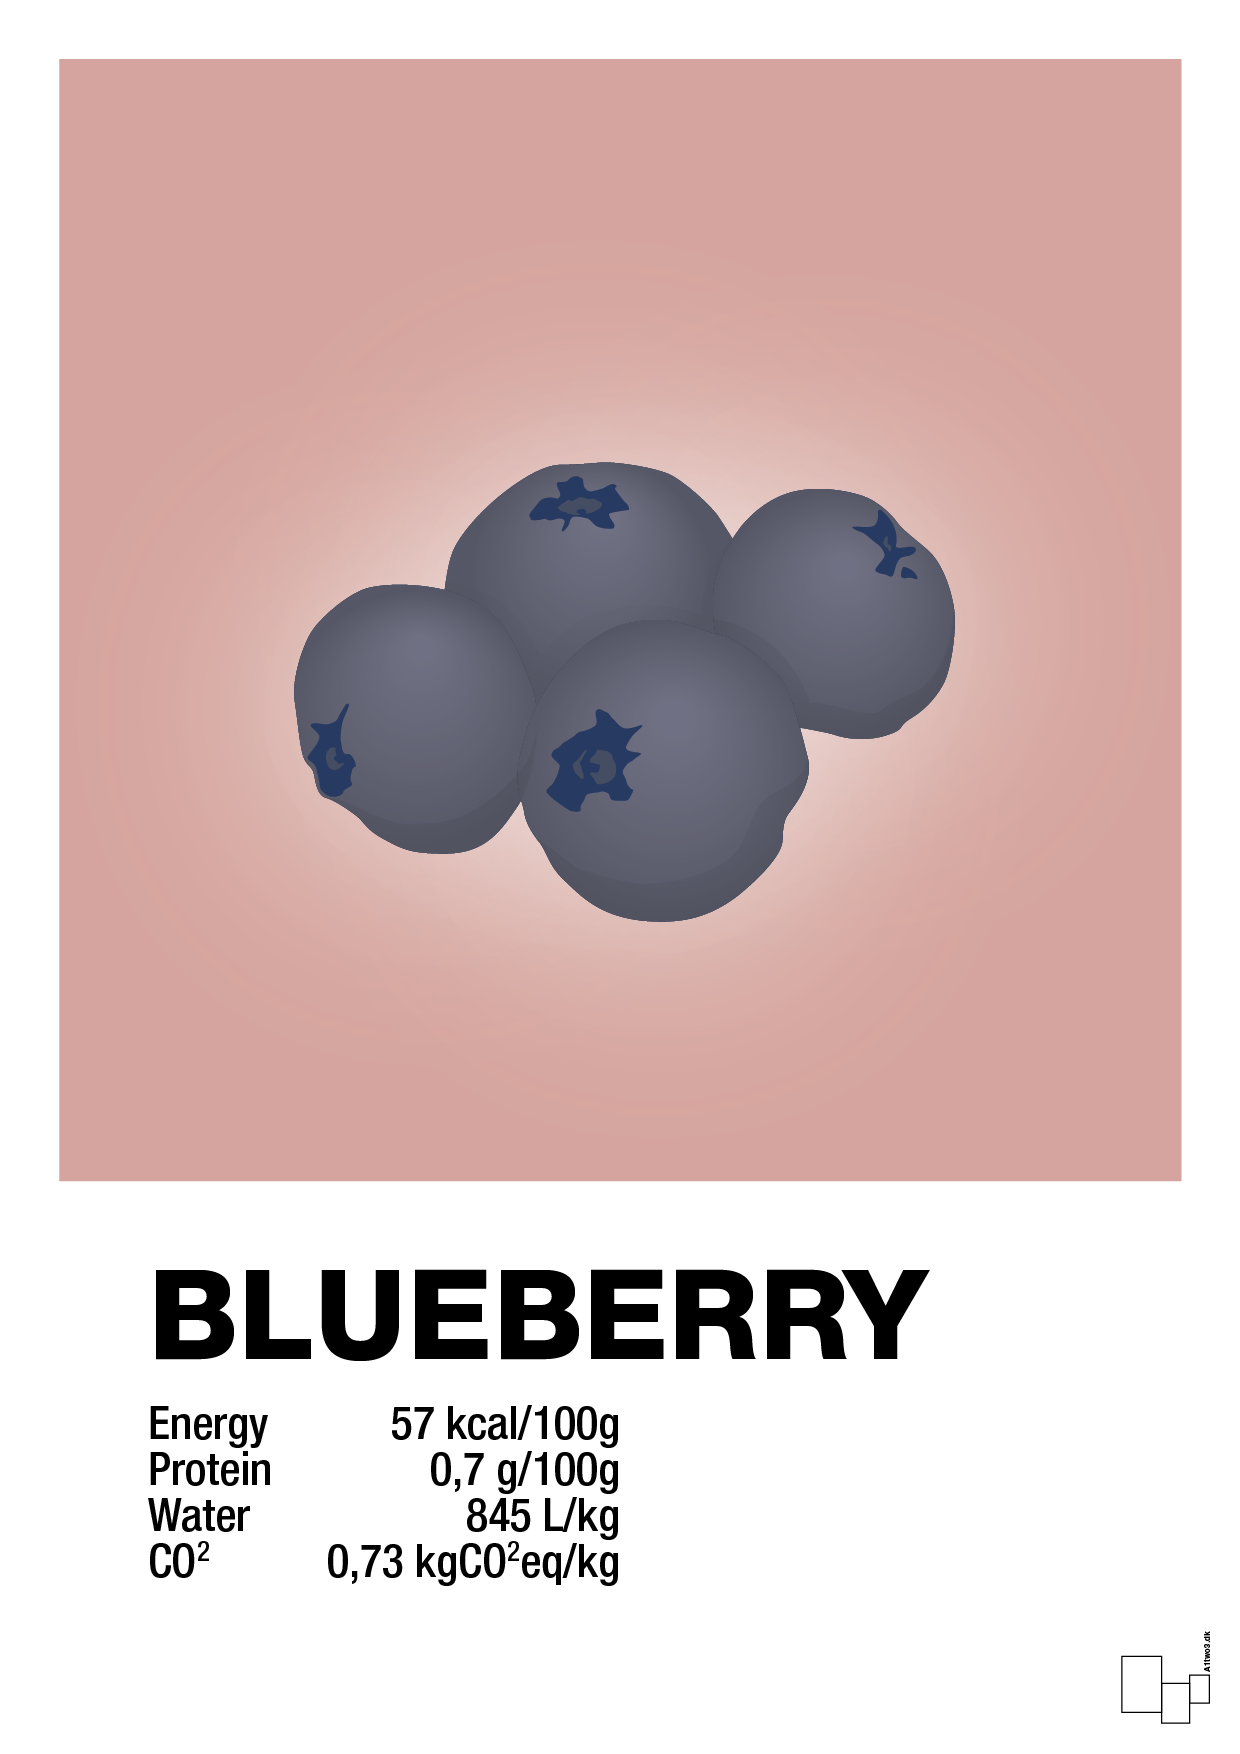 blueberry nutrition og miljø - Plakat med Mad & Drikke i Bubble Shell